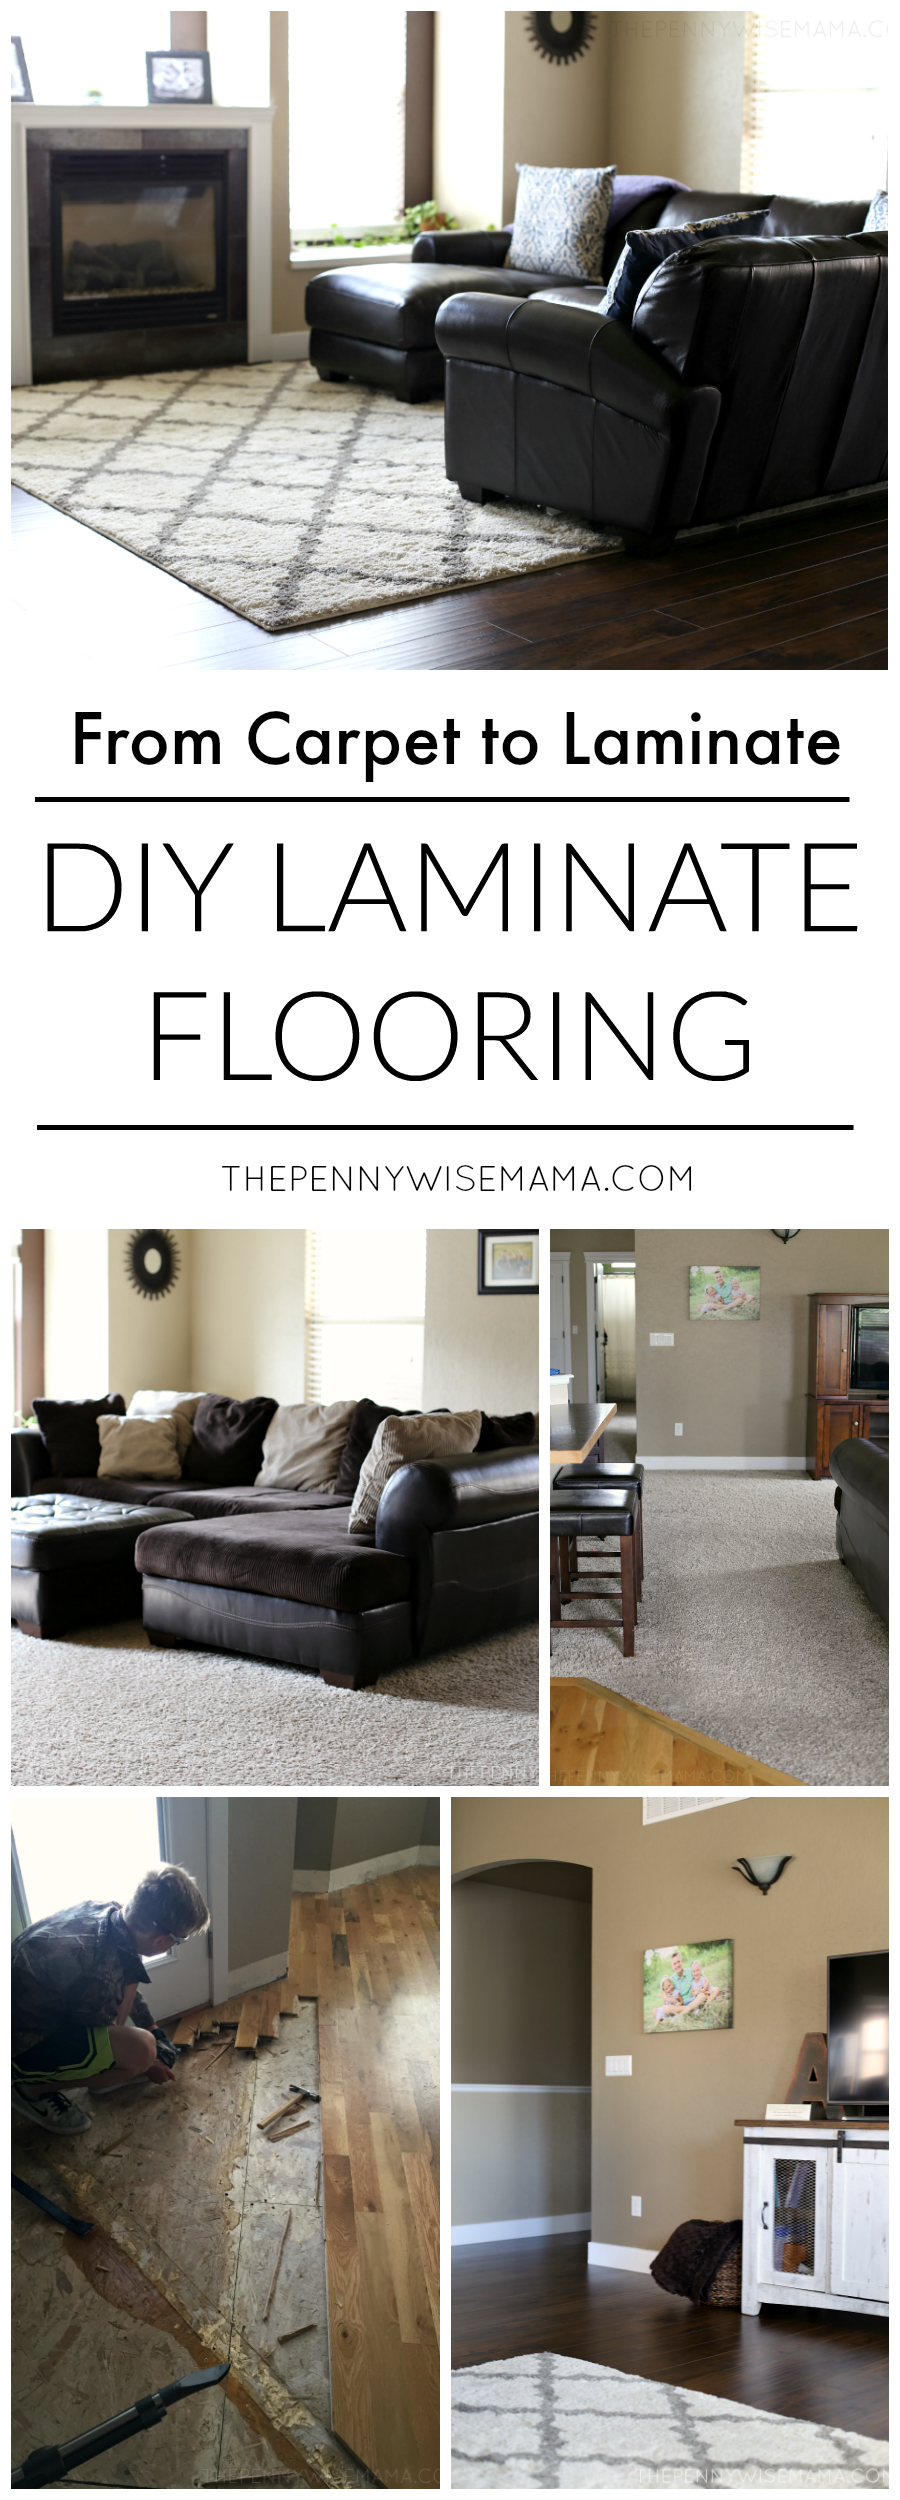 DIY Laminate Flooring featuring Select Surfaces laminate